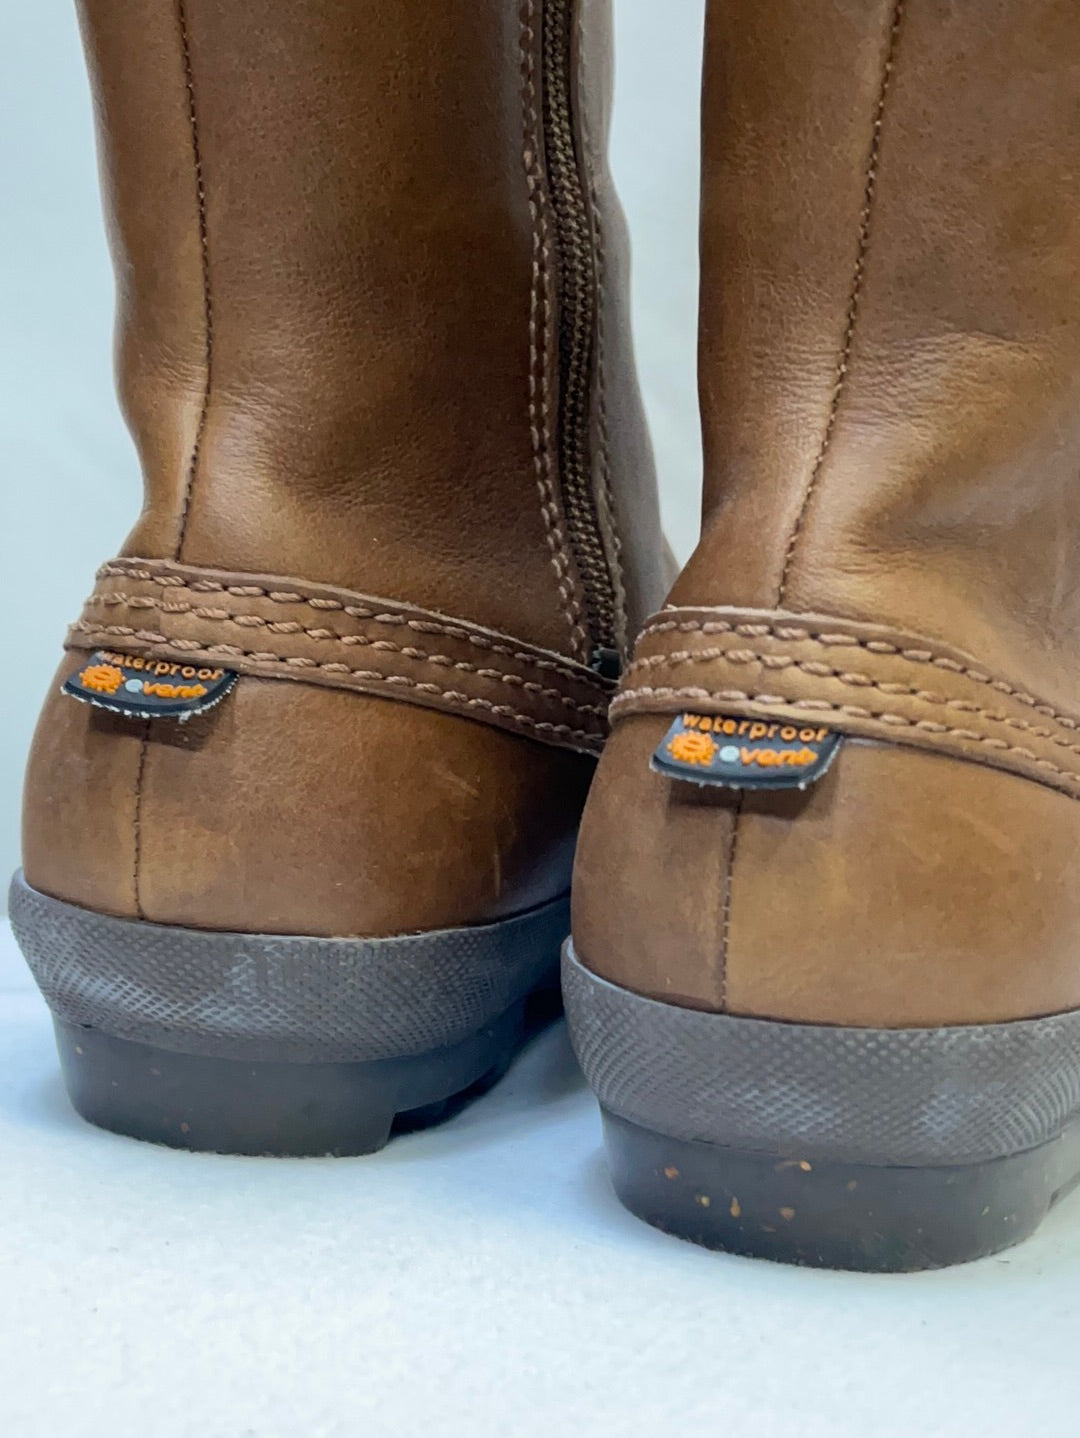 Ugg Belfair Chestnut Sheepskin Waterproof Boots